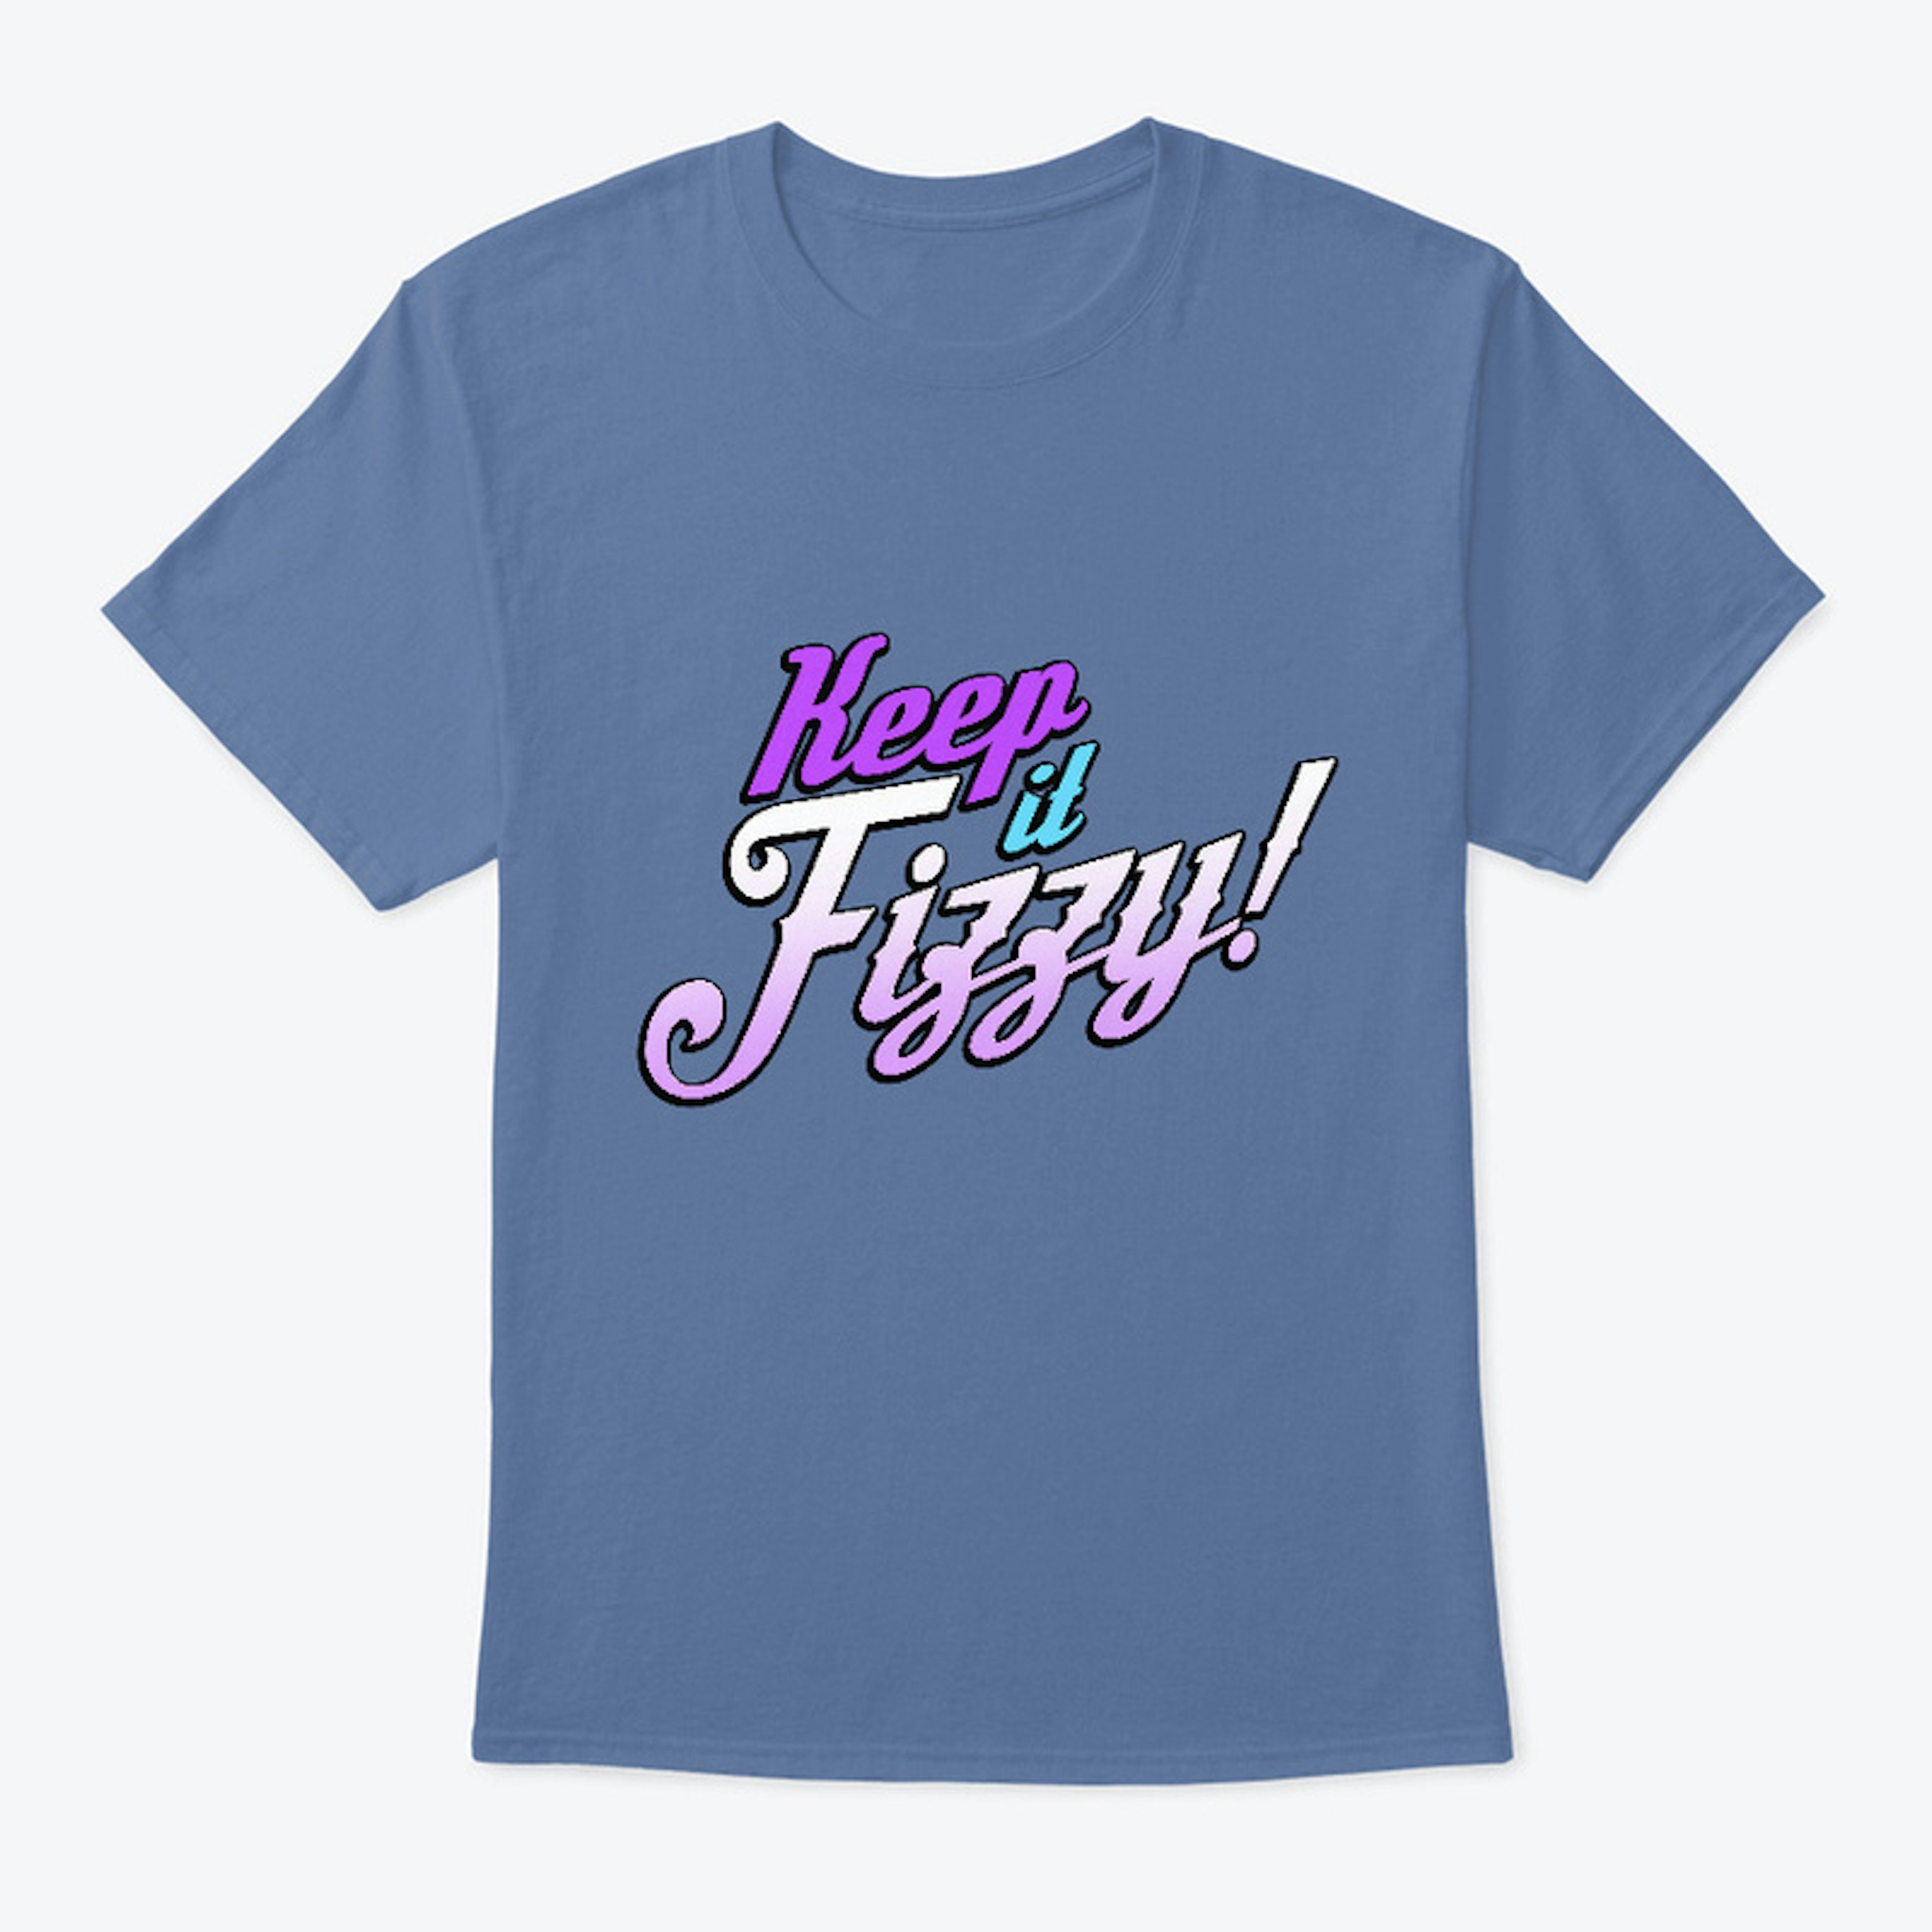 Keep it Fizzy! t-shirt